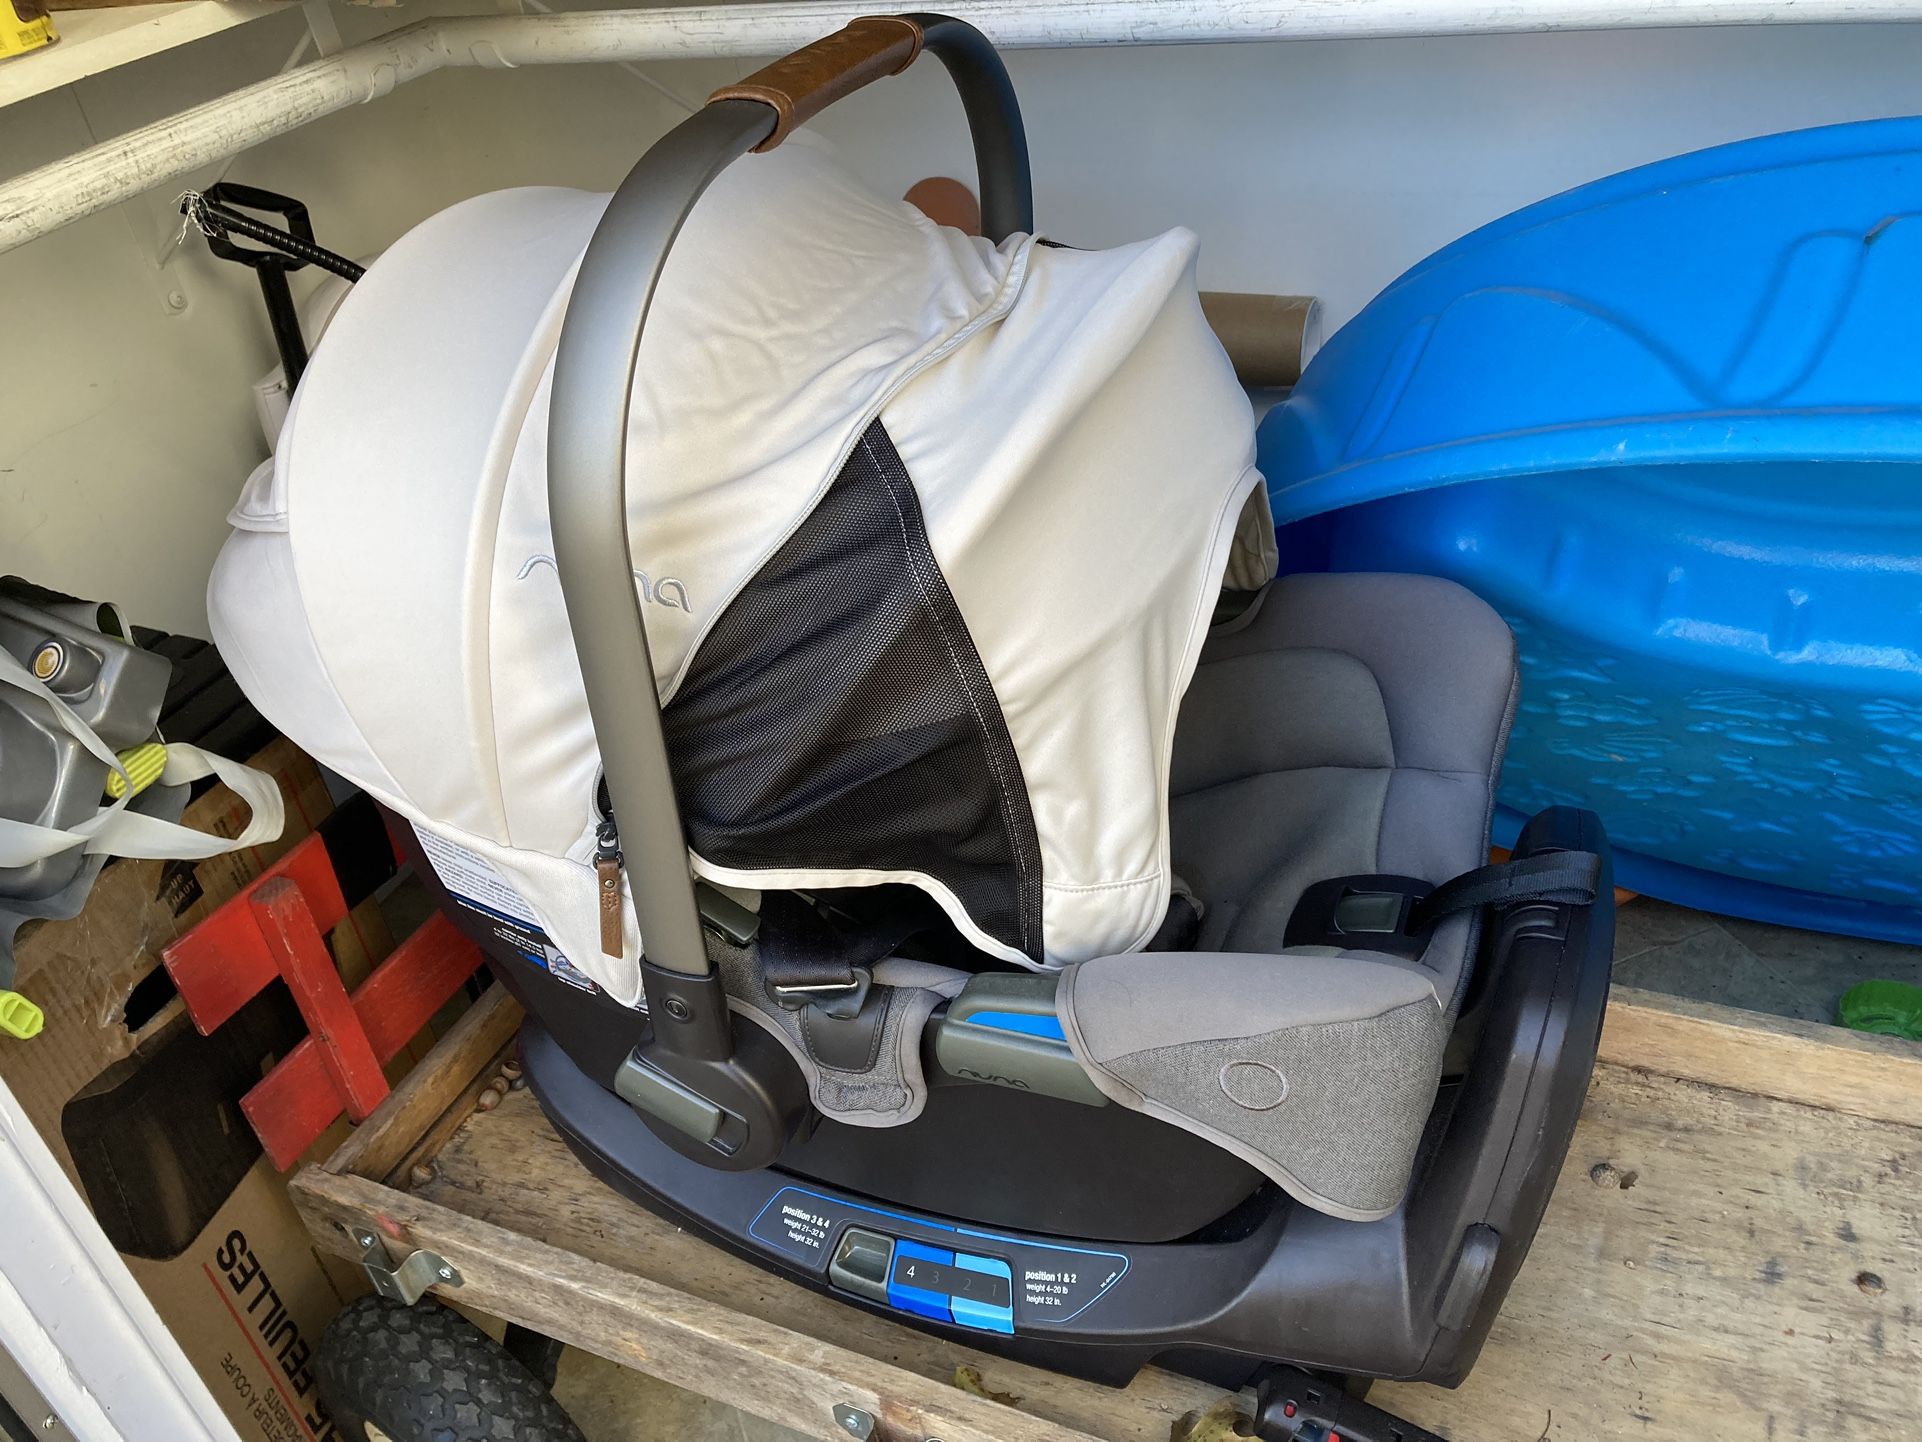 Nuna Pipa RX w Base Infant Car Seat + Infant Insert 2020